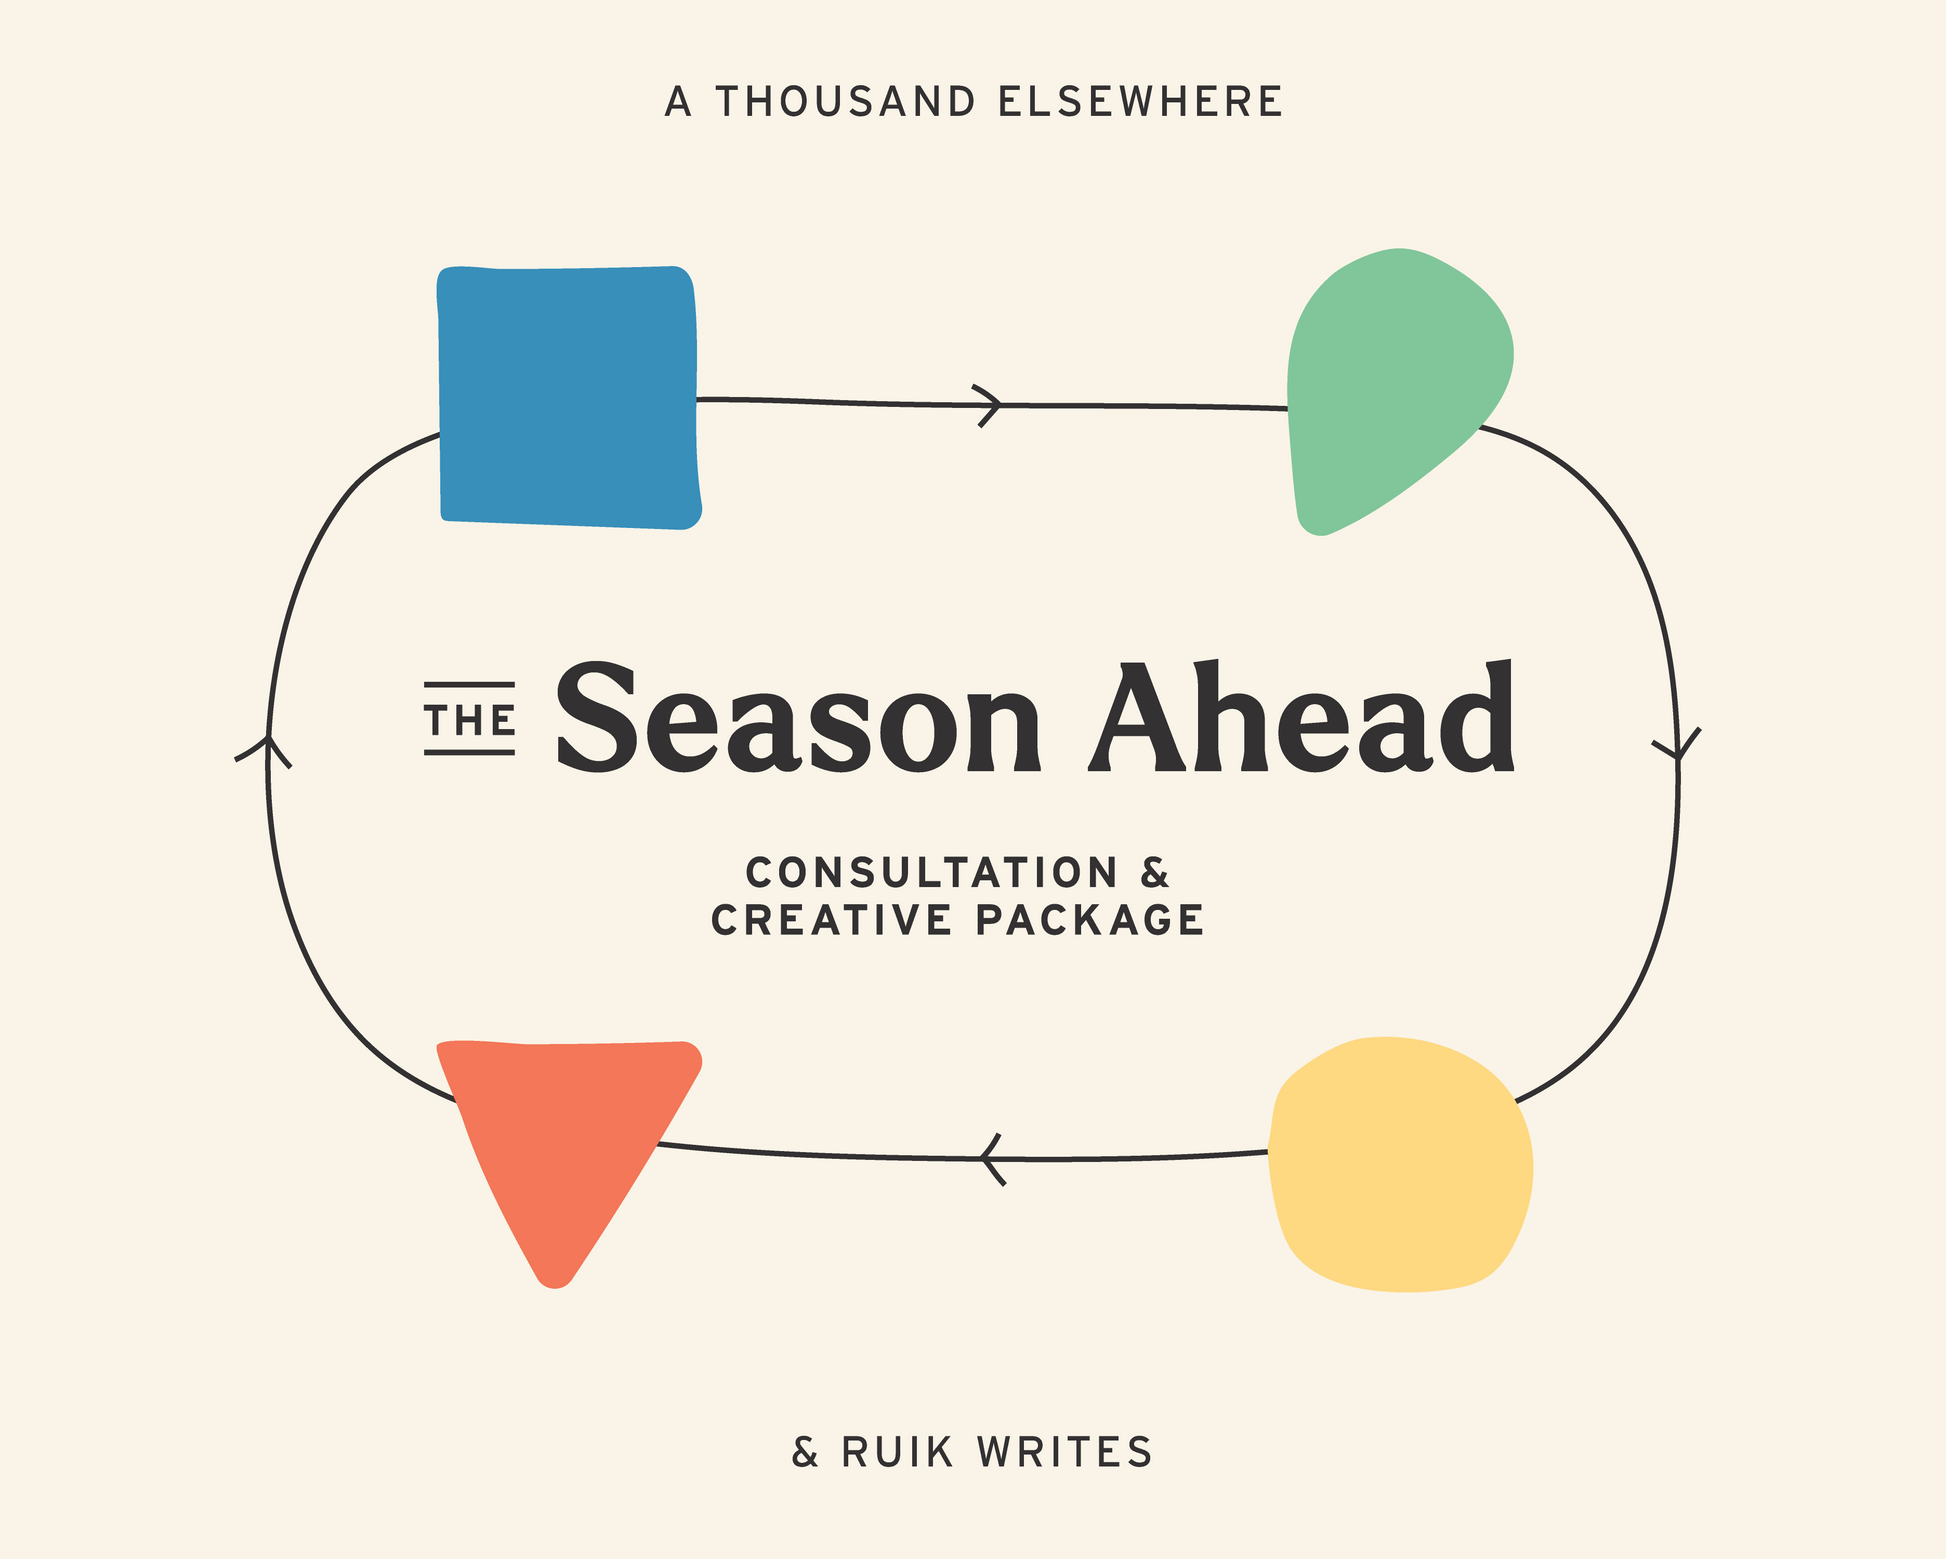 The Season Ahead - Consultation & Creative Package - A Thousand Elsewhere